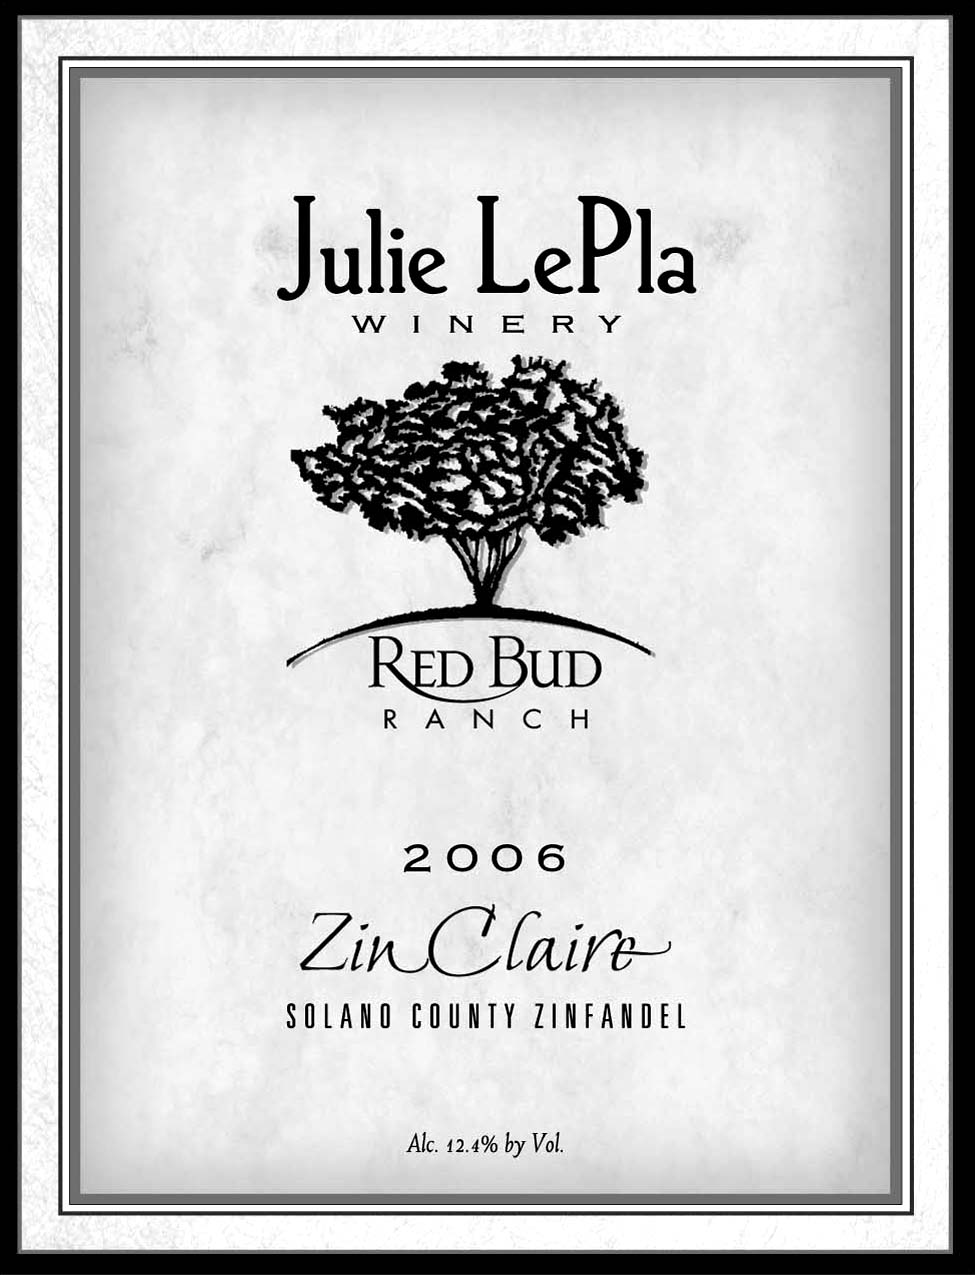 Julie LePla Winery